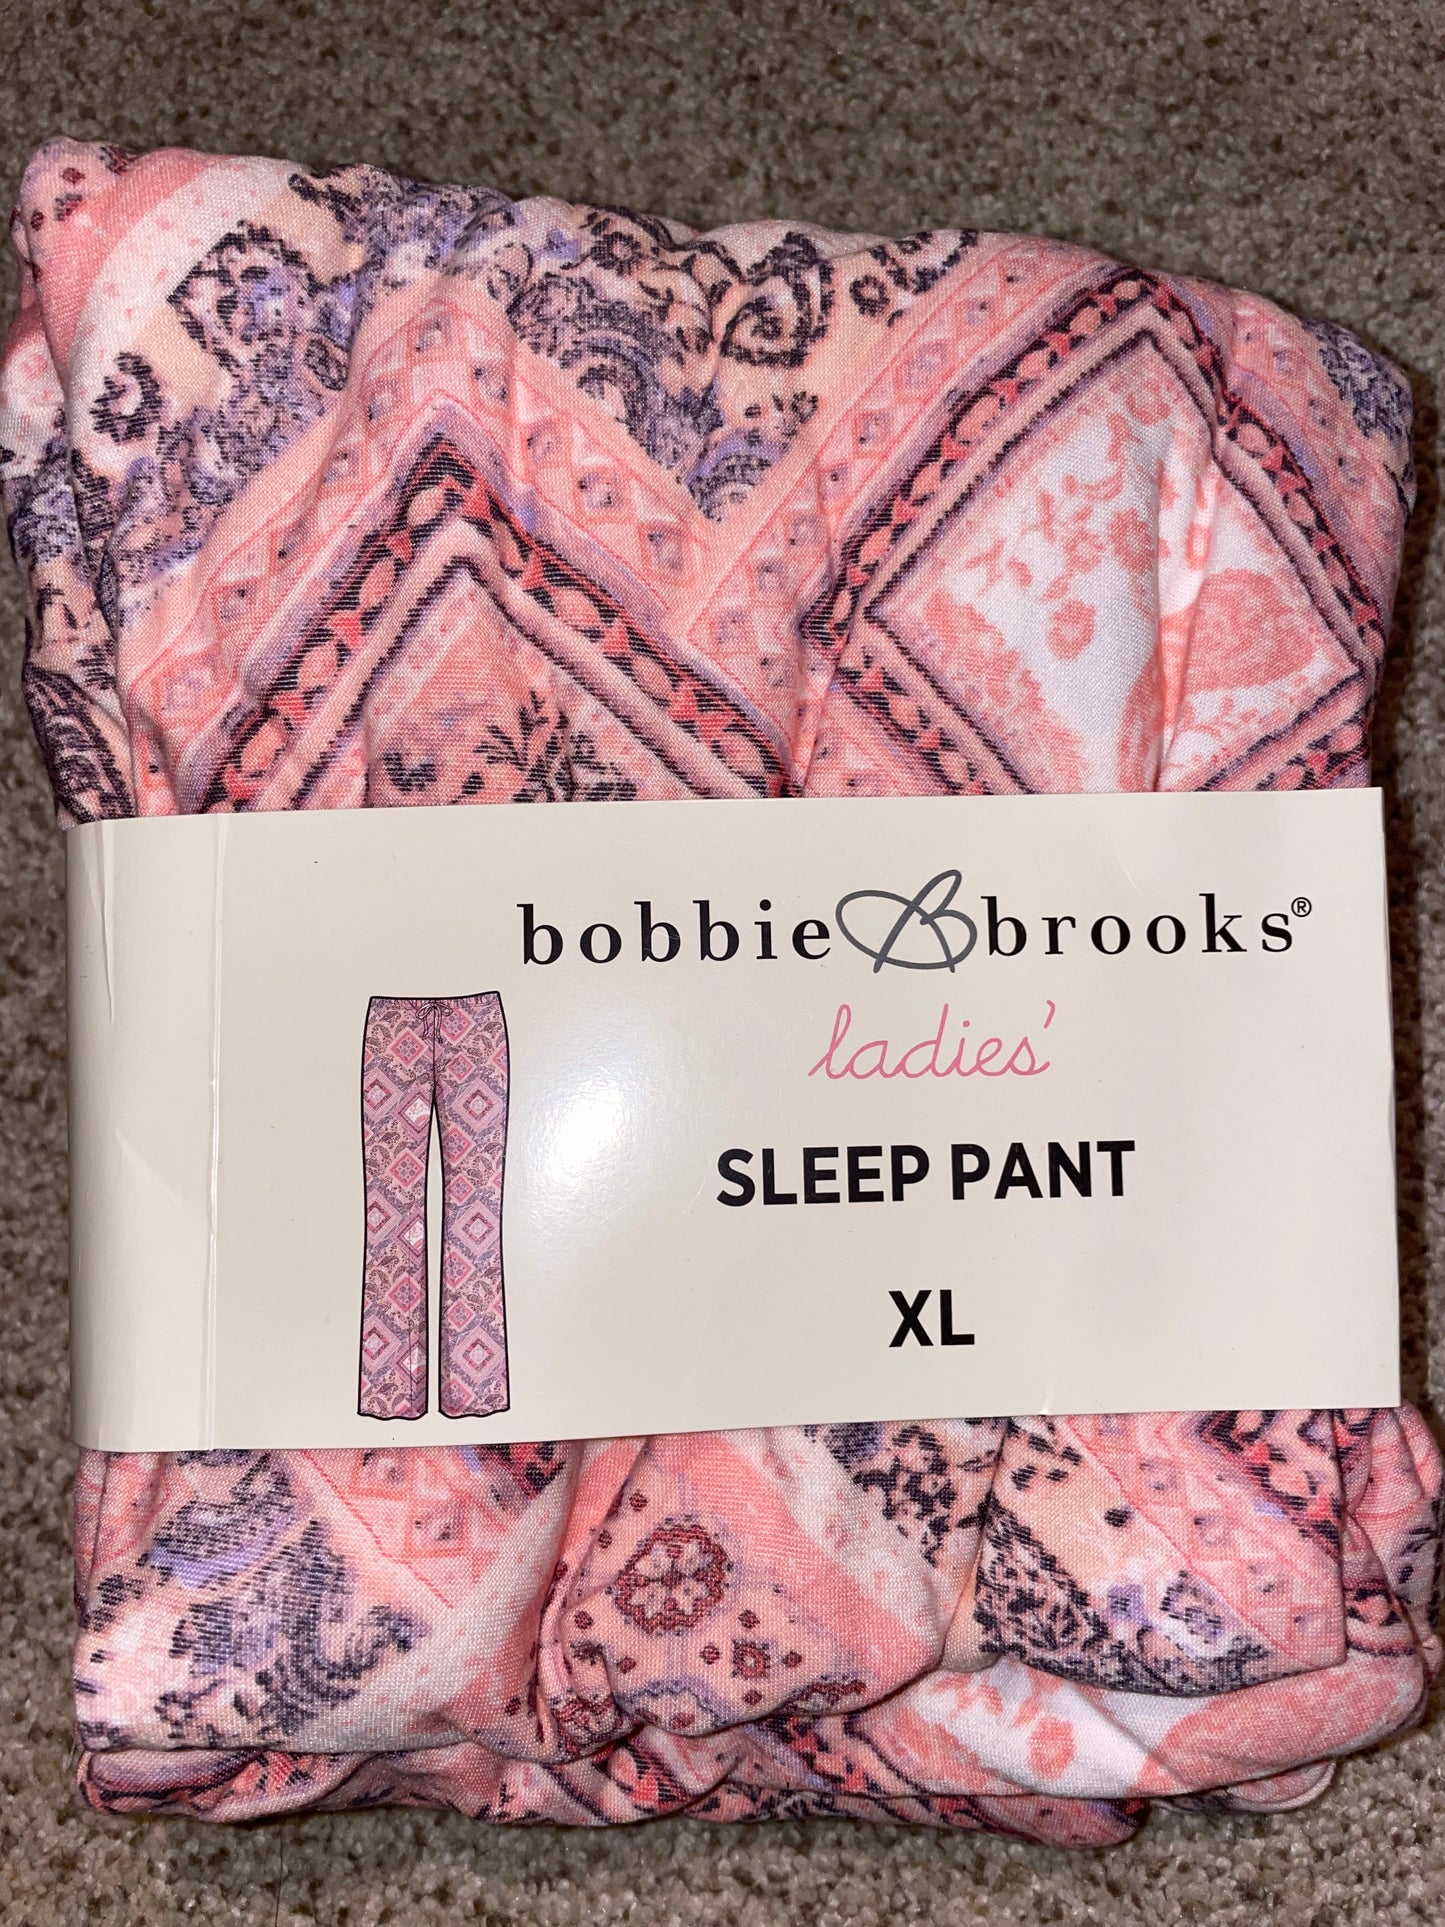 Women’s, Bobbie Brooks Graphic Tees and Sleep Pants